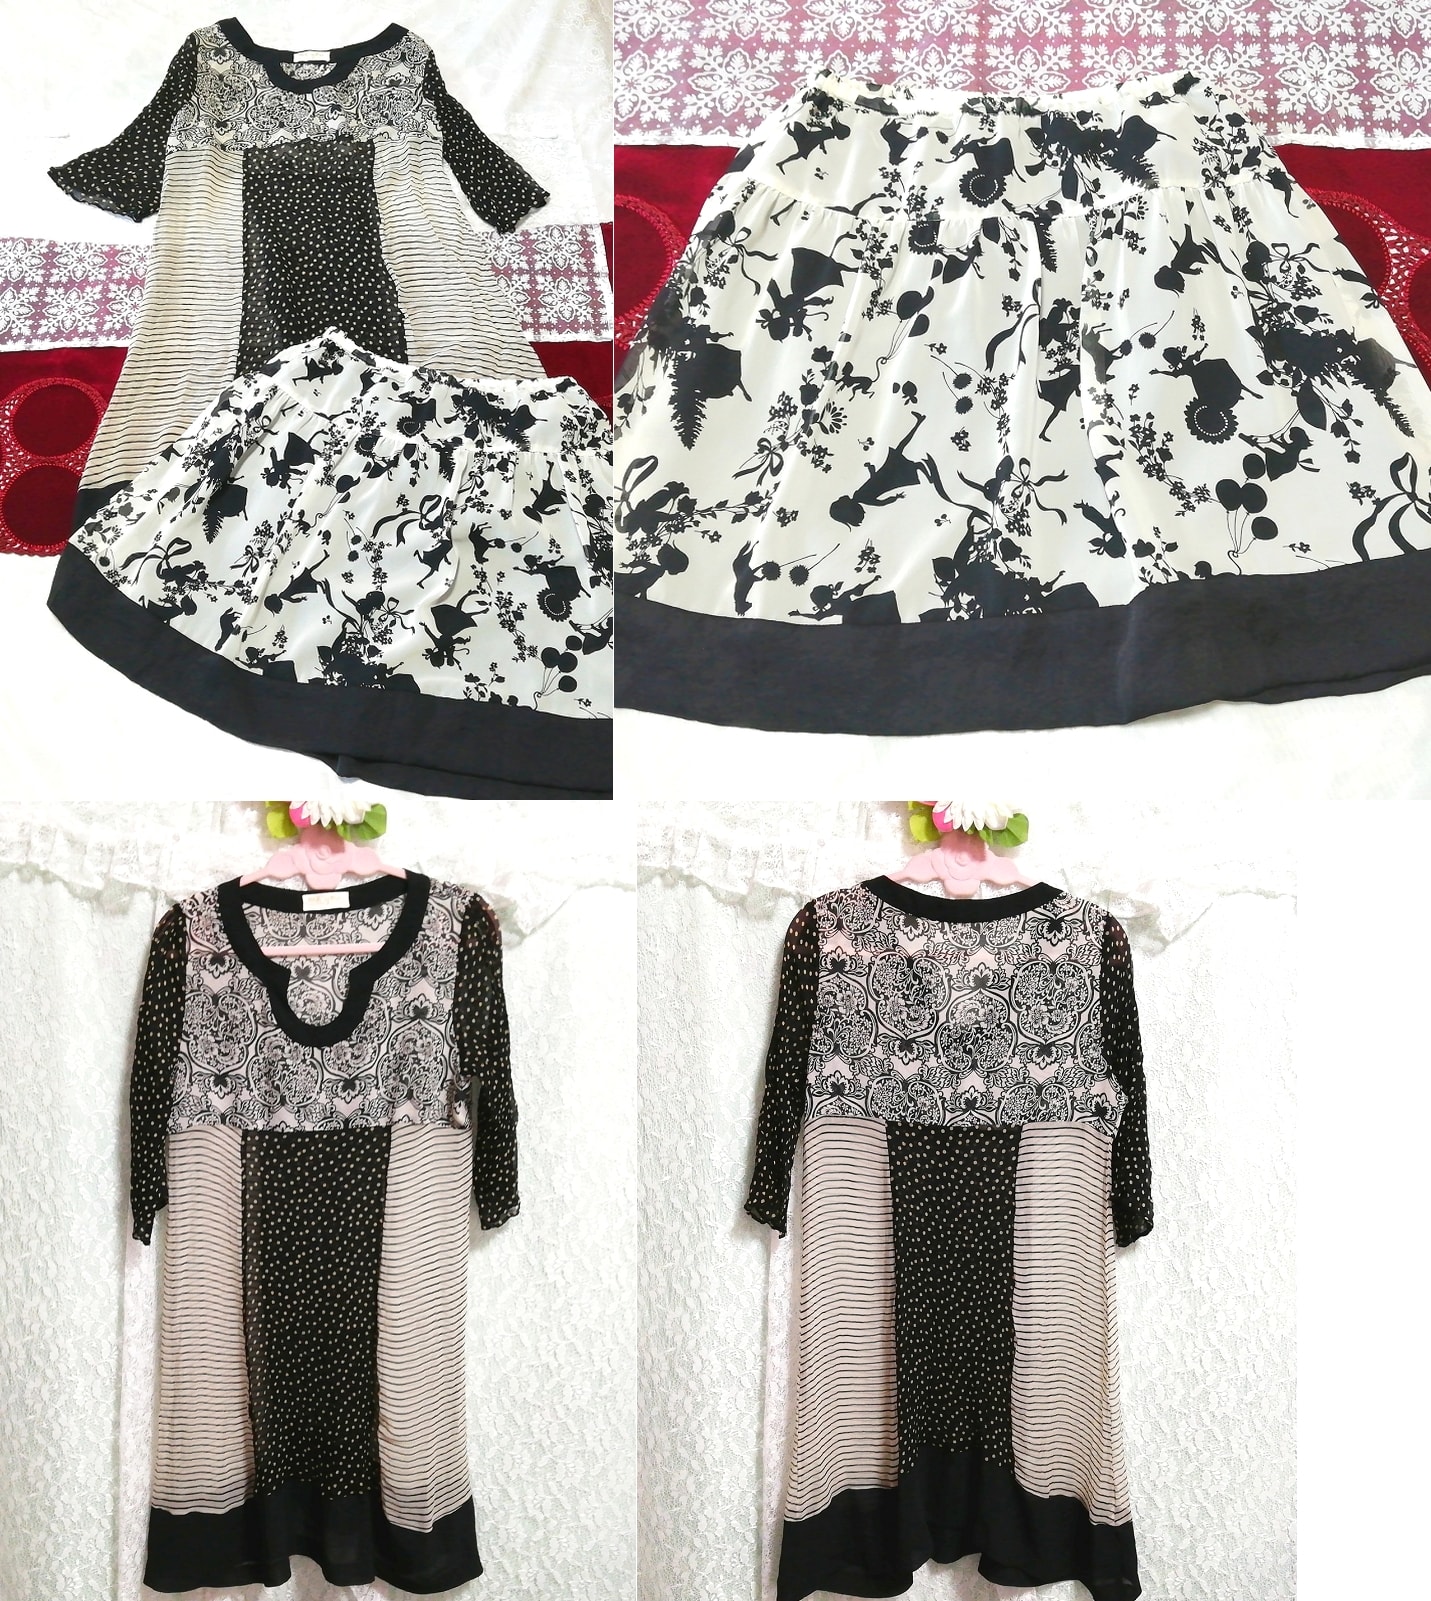 Black and white chiffon see-through tunic negligee nightgown cutout silhouette miniskirt 2P, fashion, ladies' fashion, nightwear, pajamas